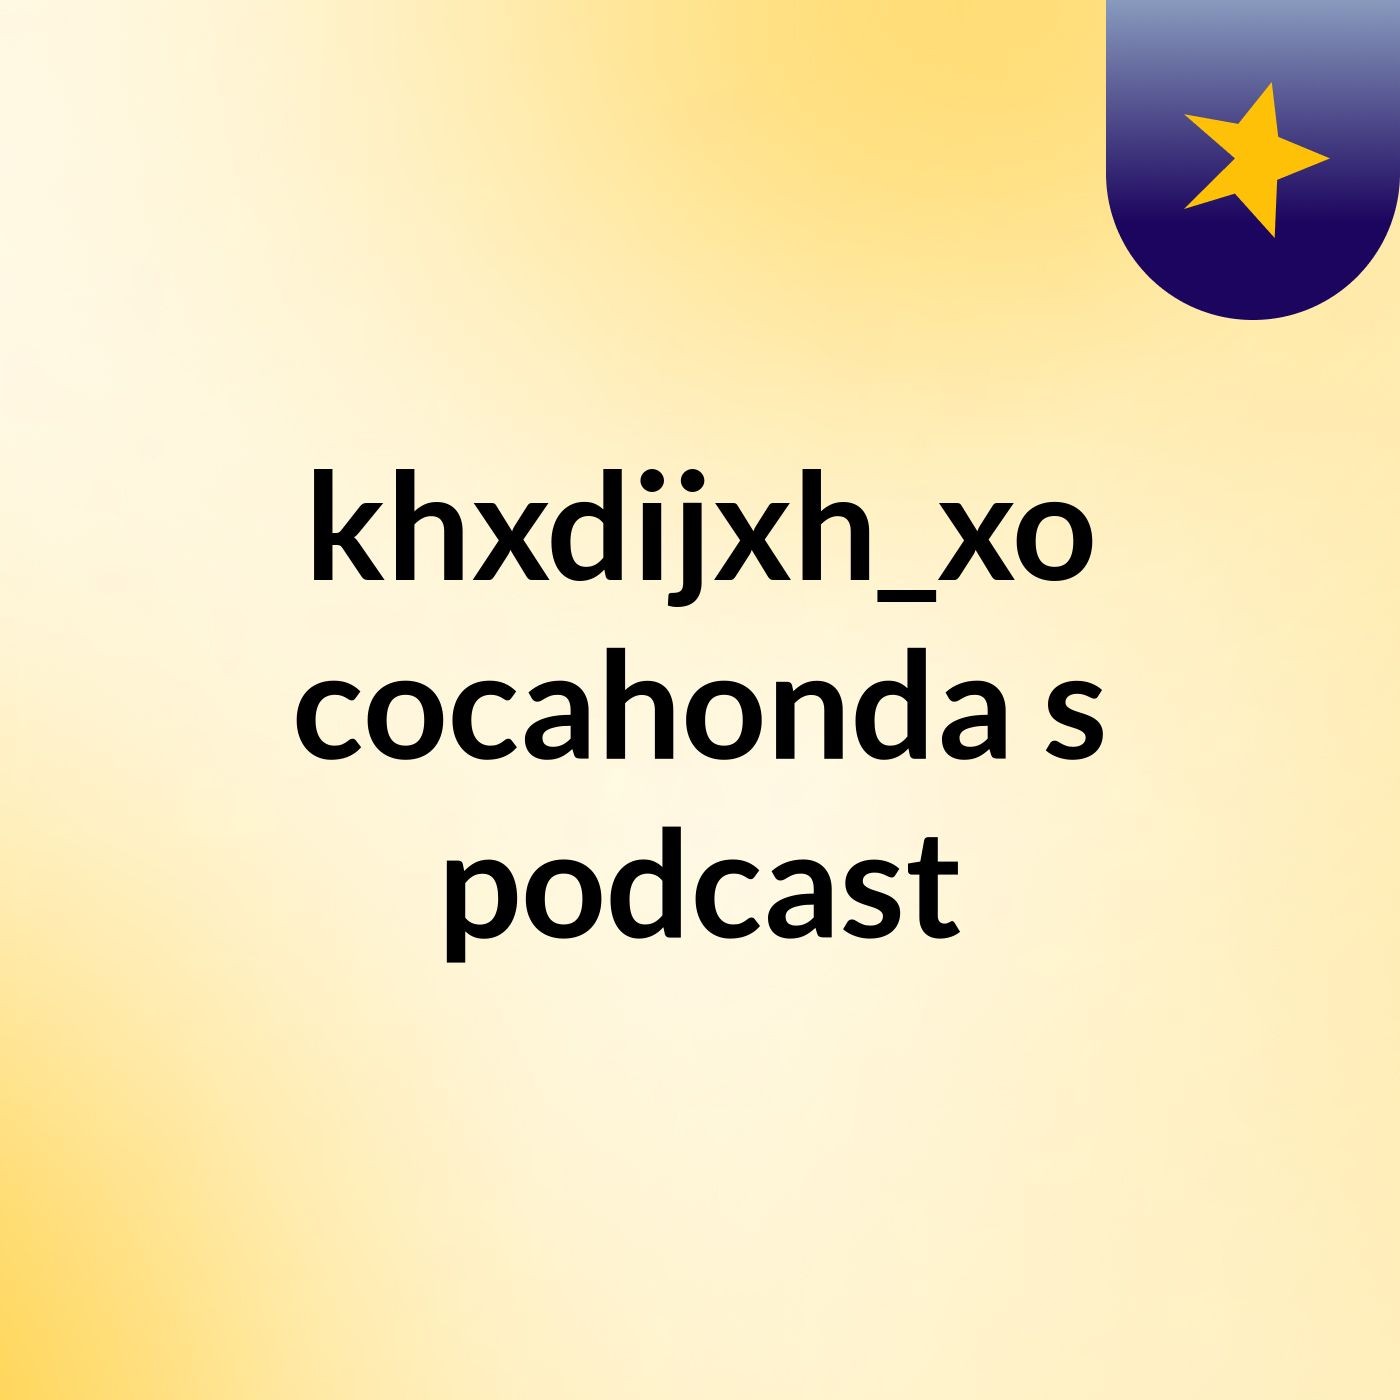 Episode 3 - khxdijxh_xo cocahonda's podcast